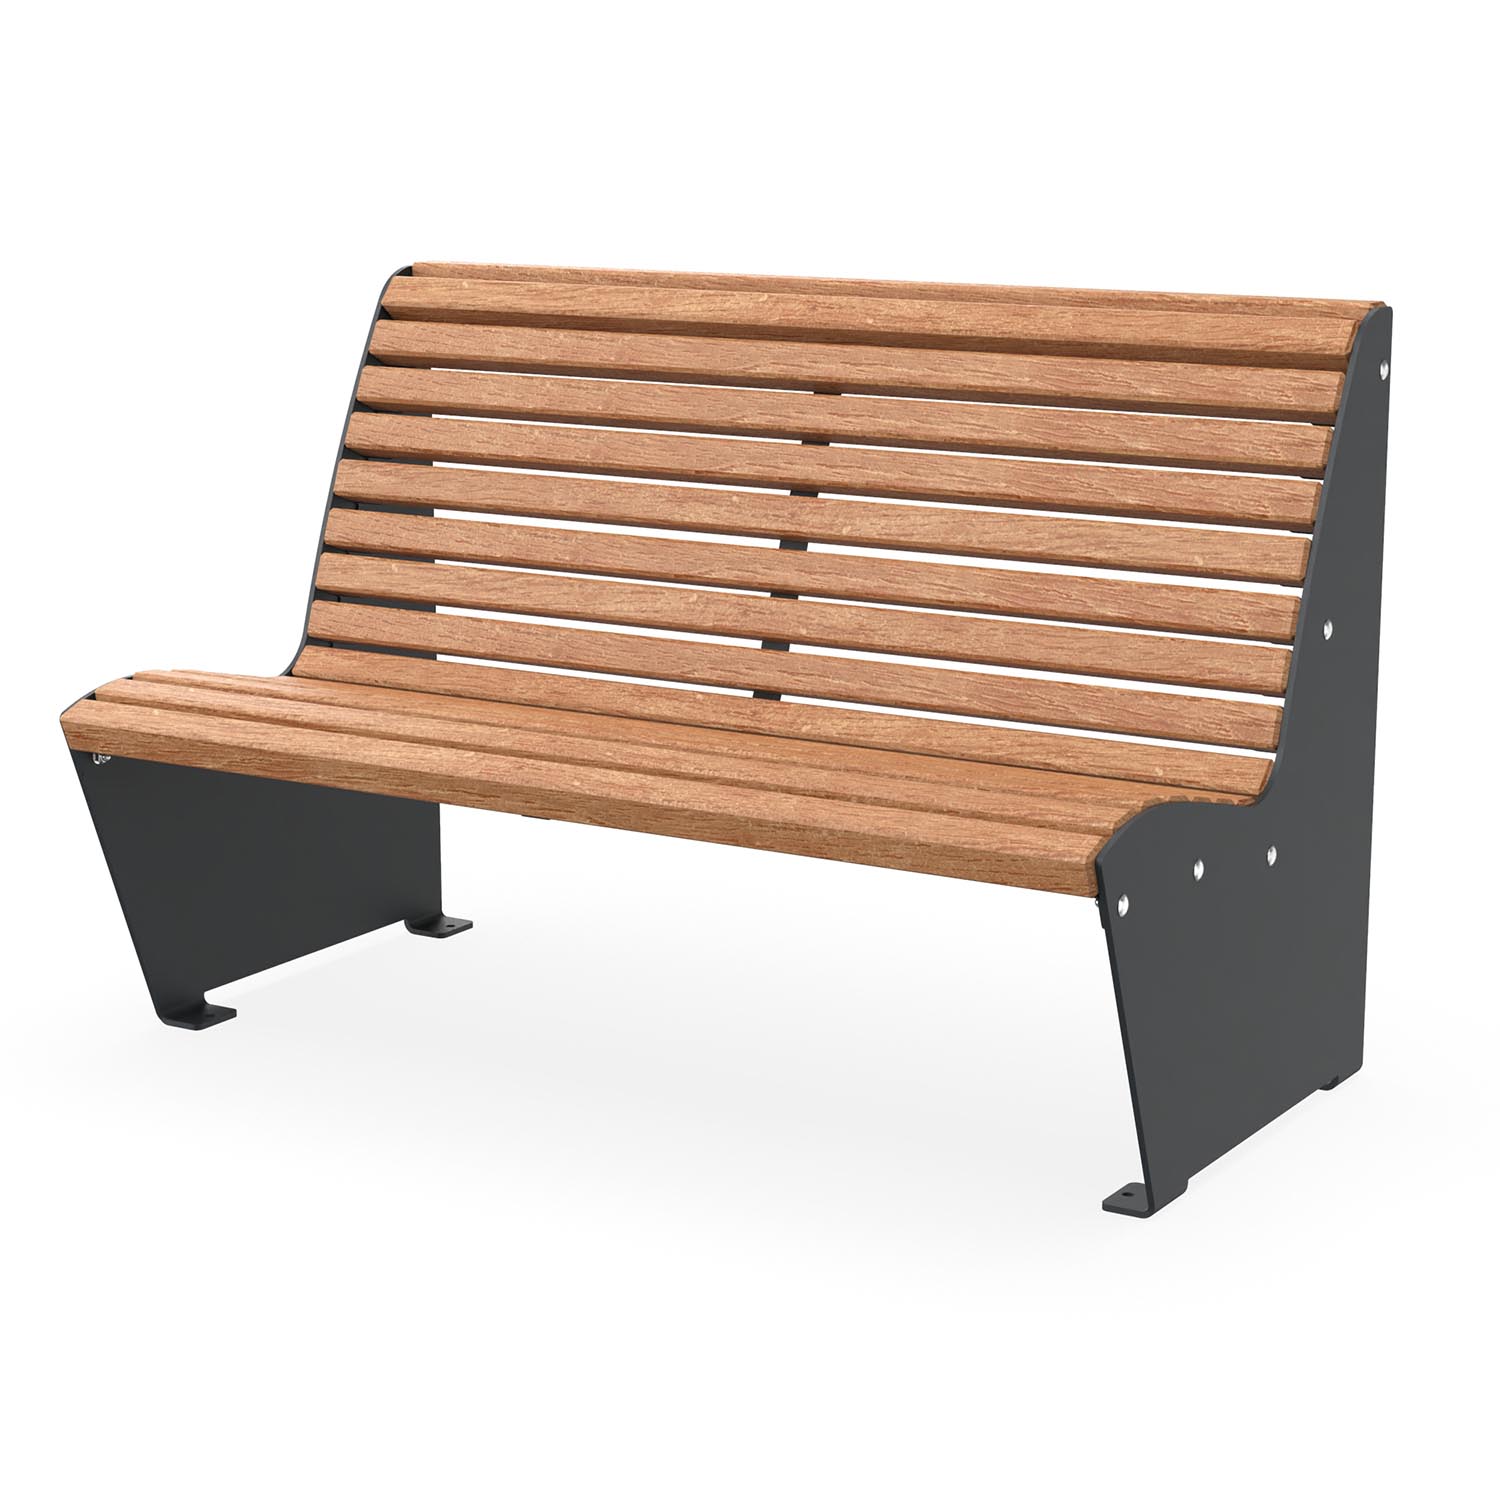 Parkbank ErgoSeat, Sitzfläche aus Holz, farbbeschichteter Stahl, 3-Sitzer